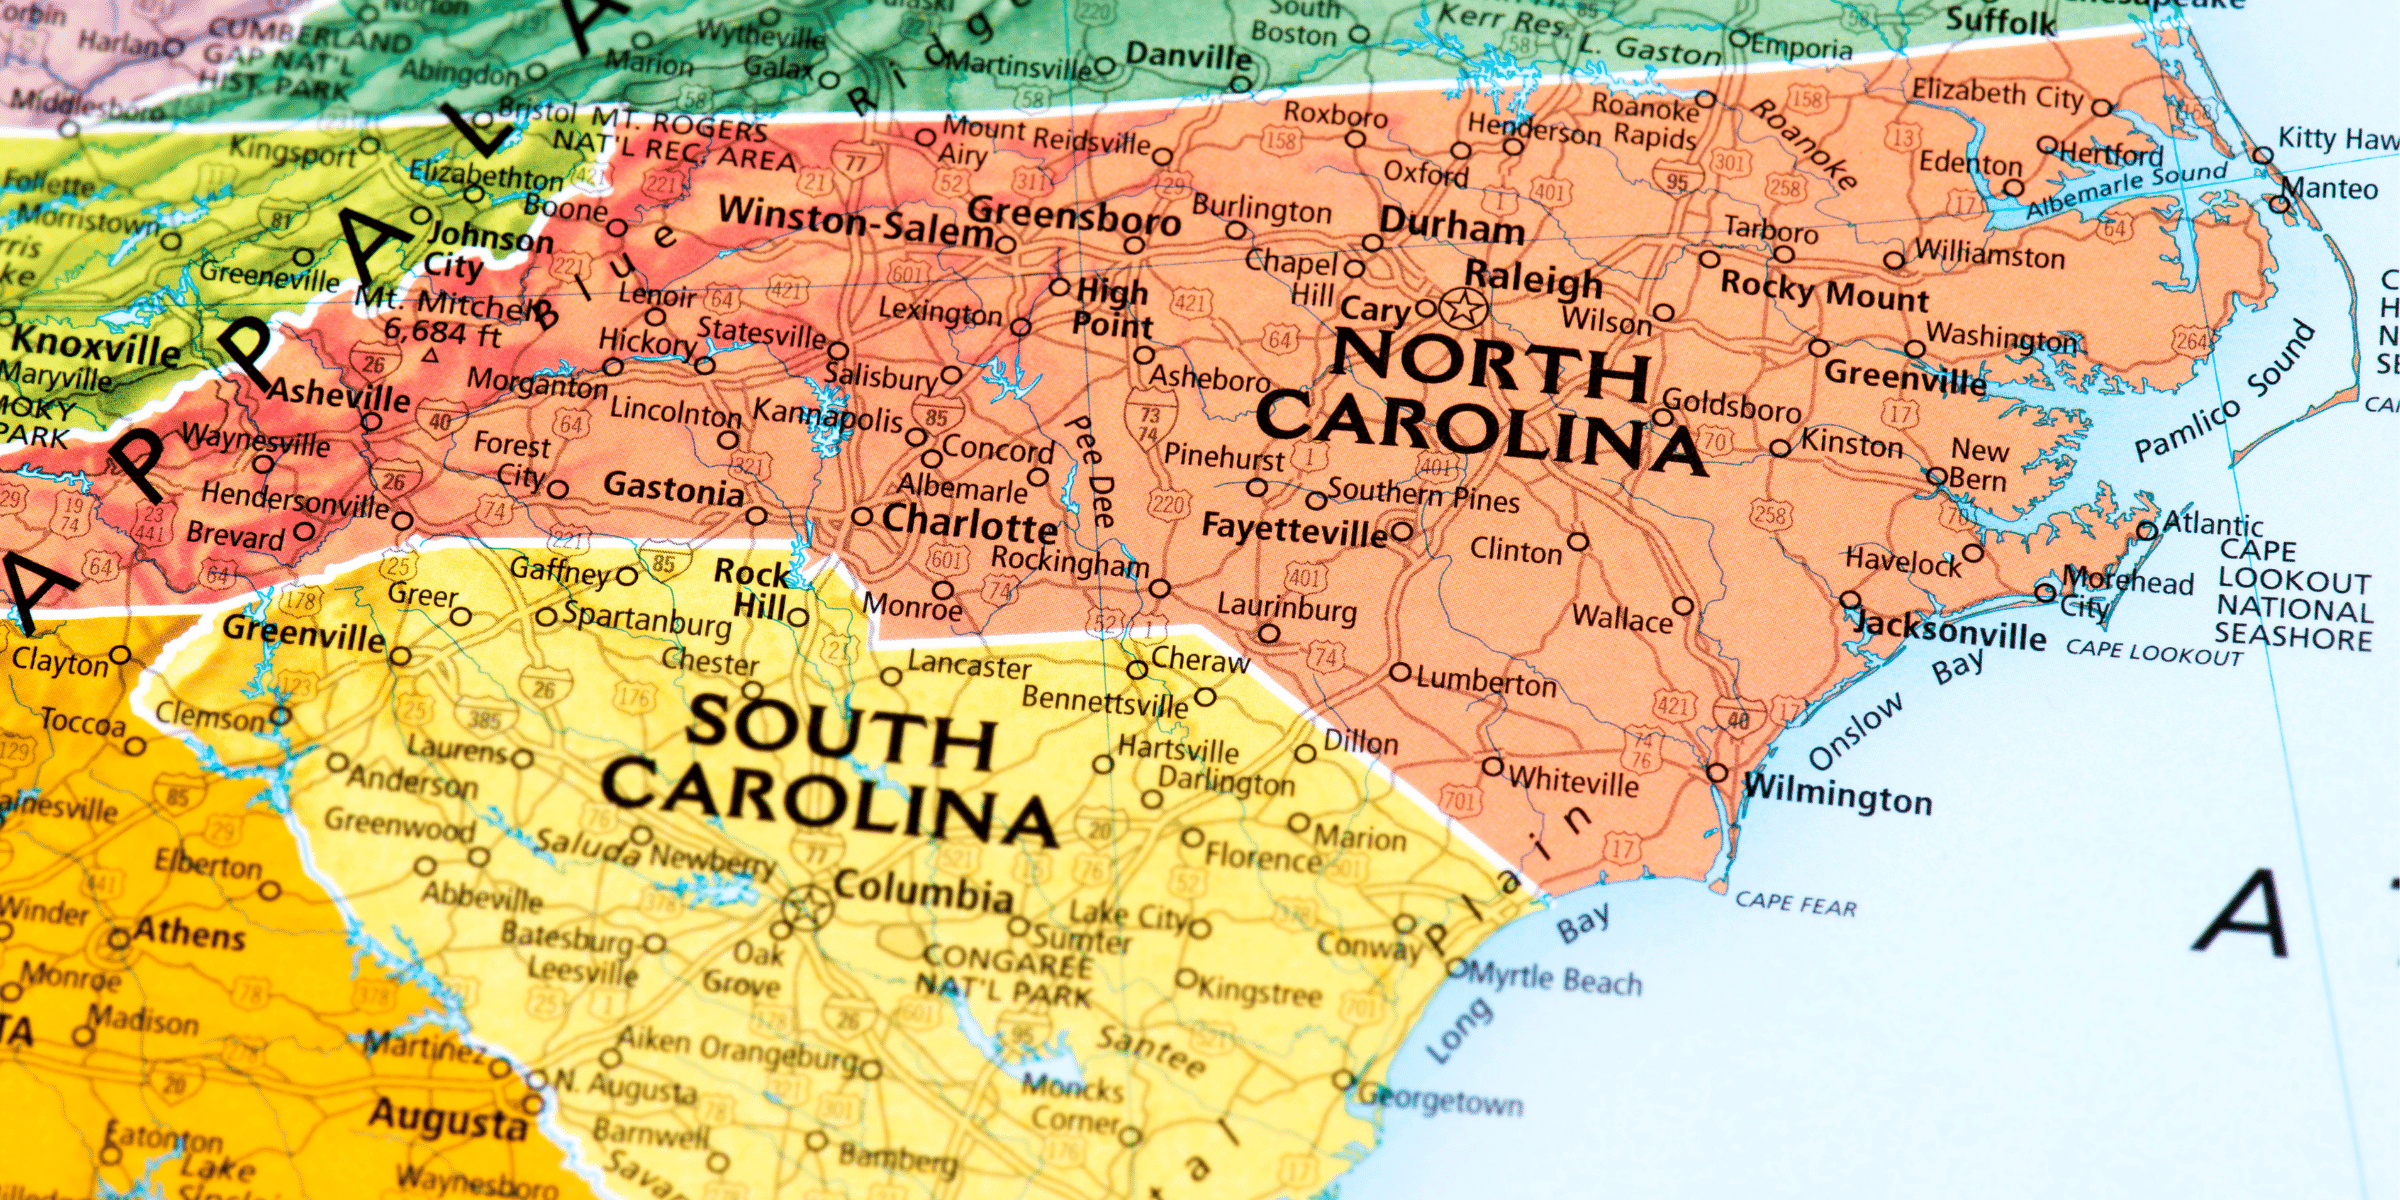 North Carolina and South Carolina - which is the better Carolina to live?